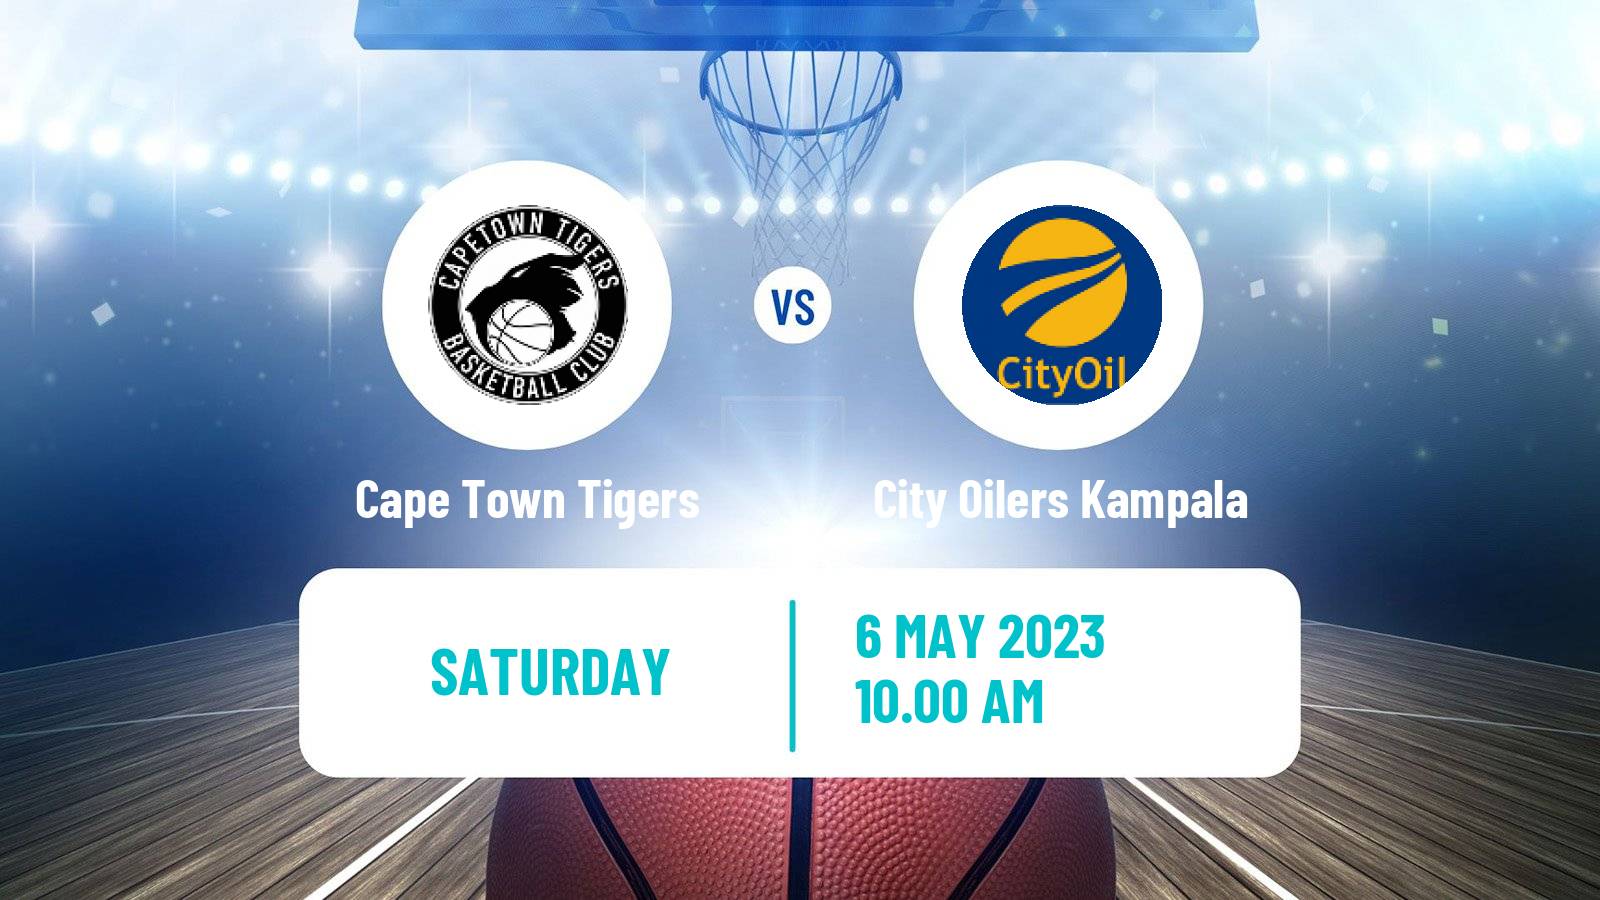 Basketball Basketball Africa League Cape Town Tigers - City Oilers Kampala